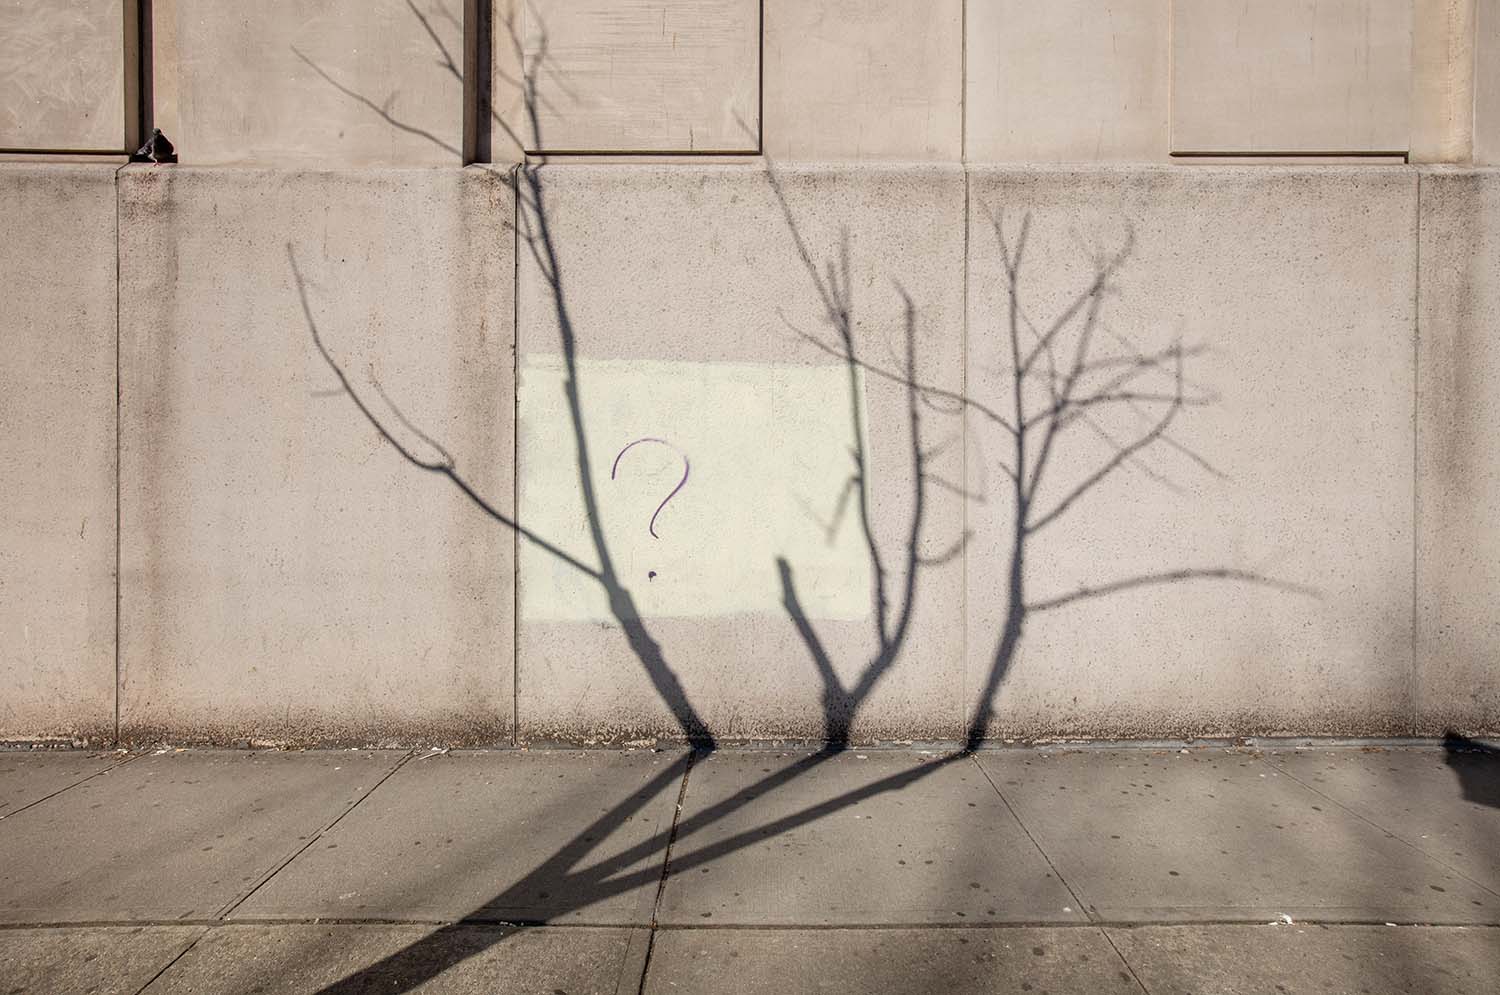 Shadow of a Dead Street Tree, Chelsea, Manhattan, from Tree Love series, 2020.